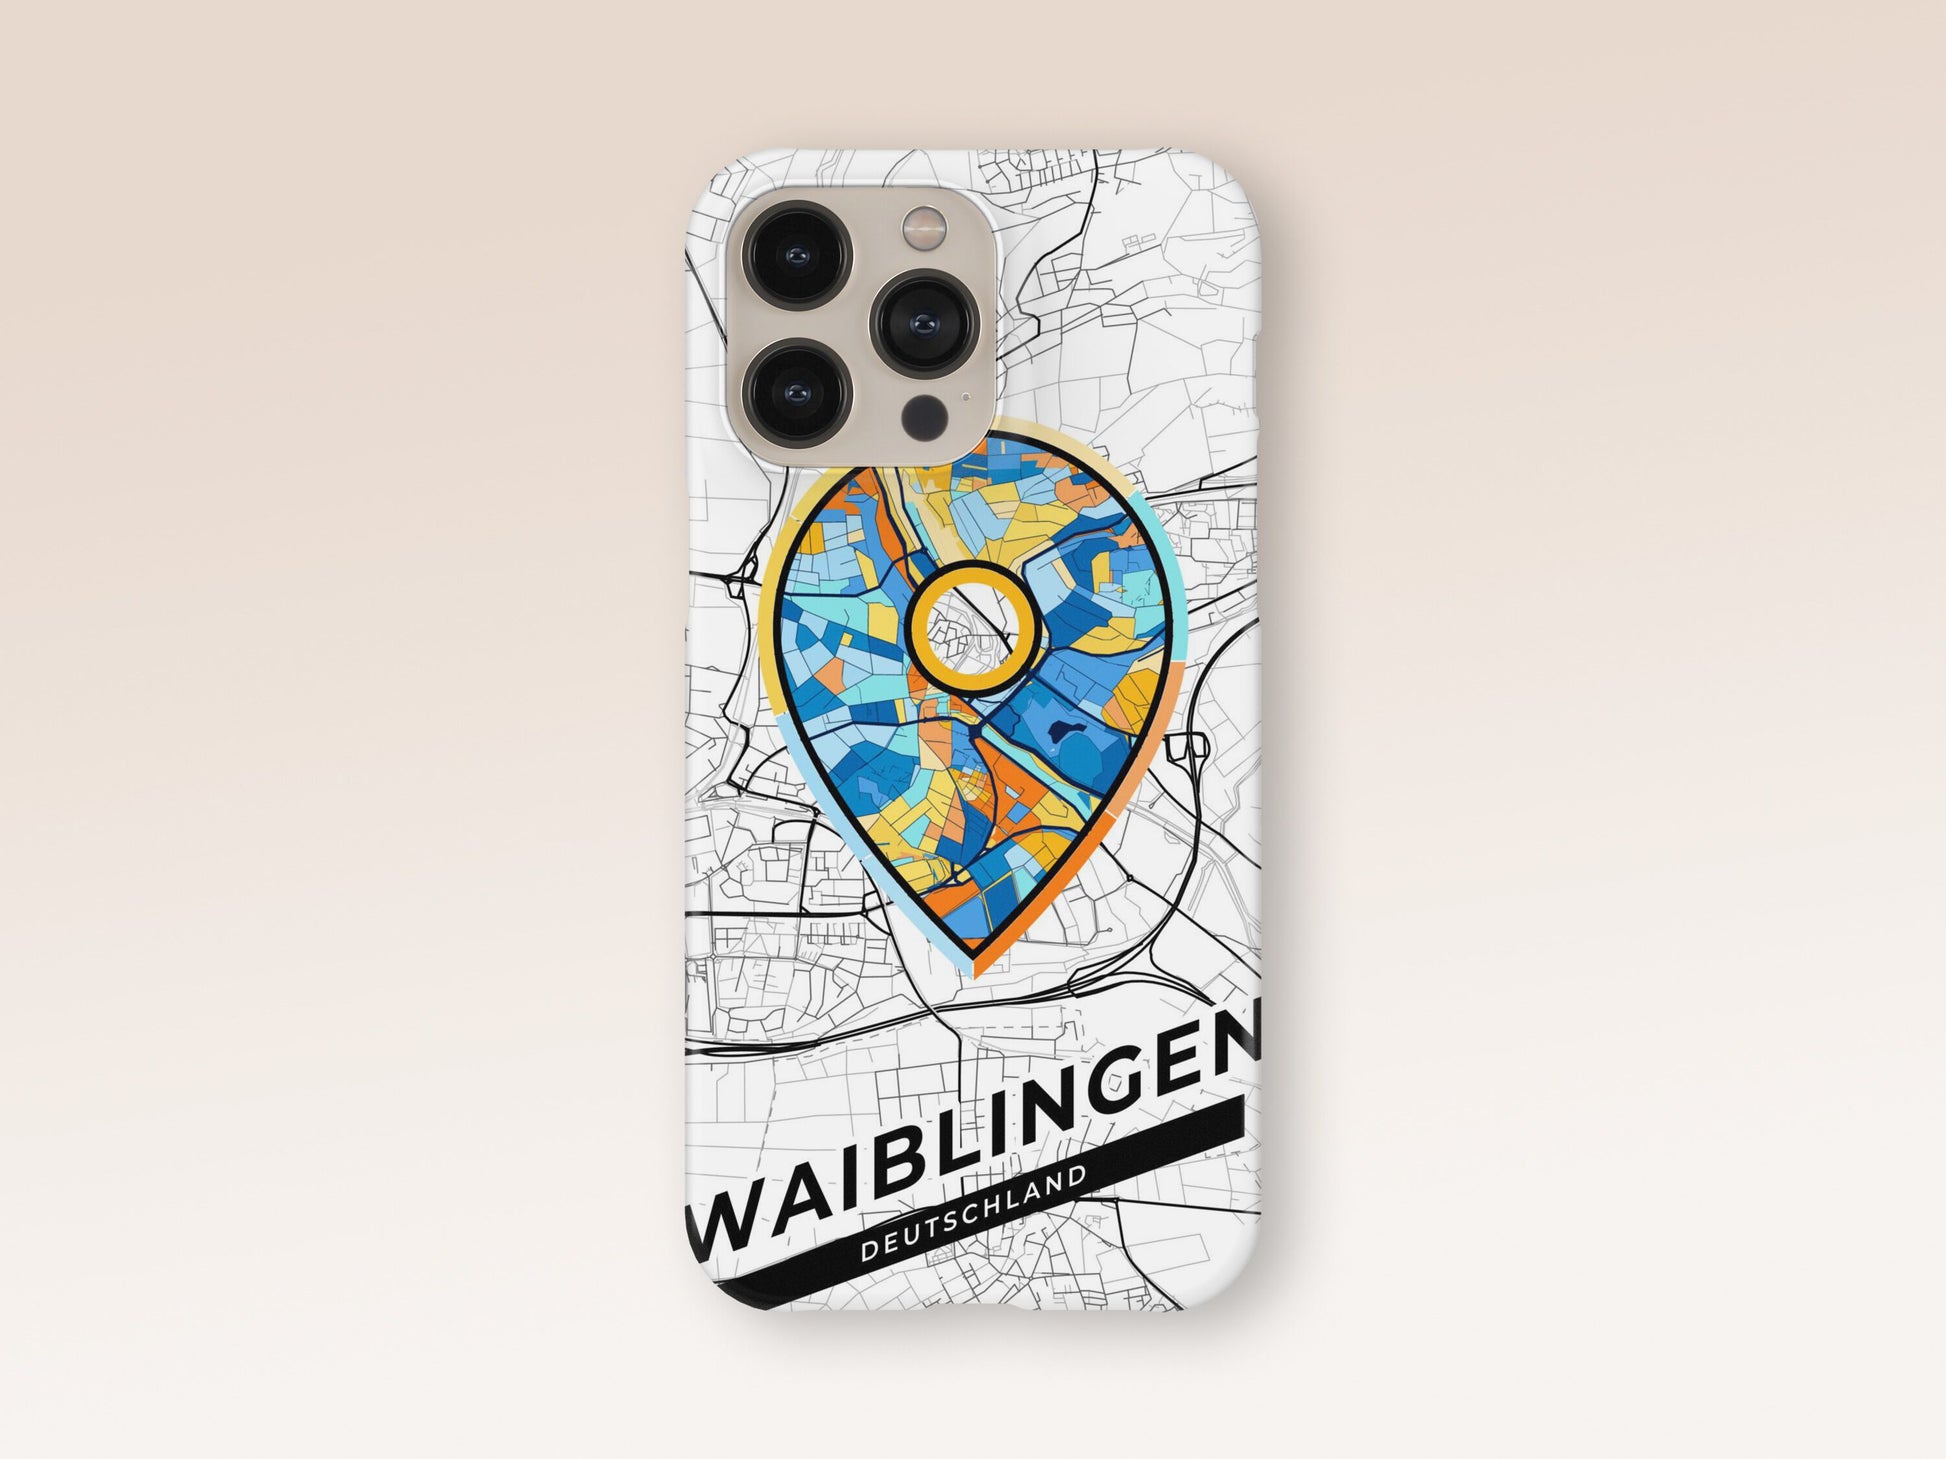 Waiblingen Deutschland slim phone case with colorful icon 1